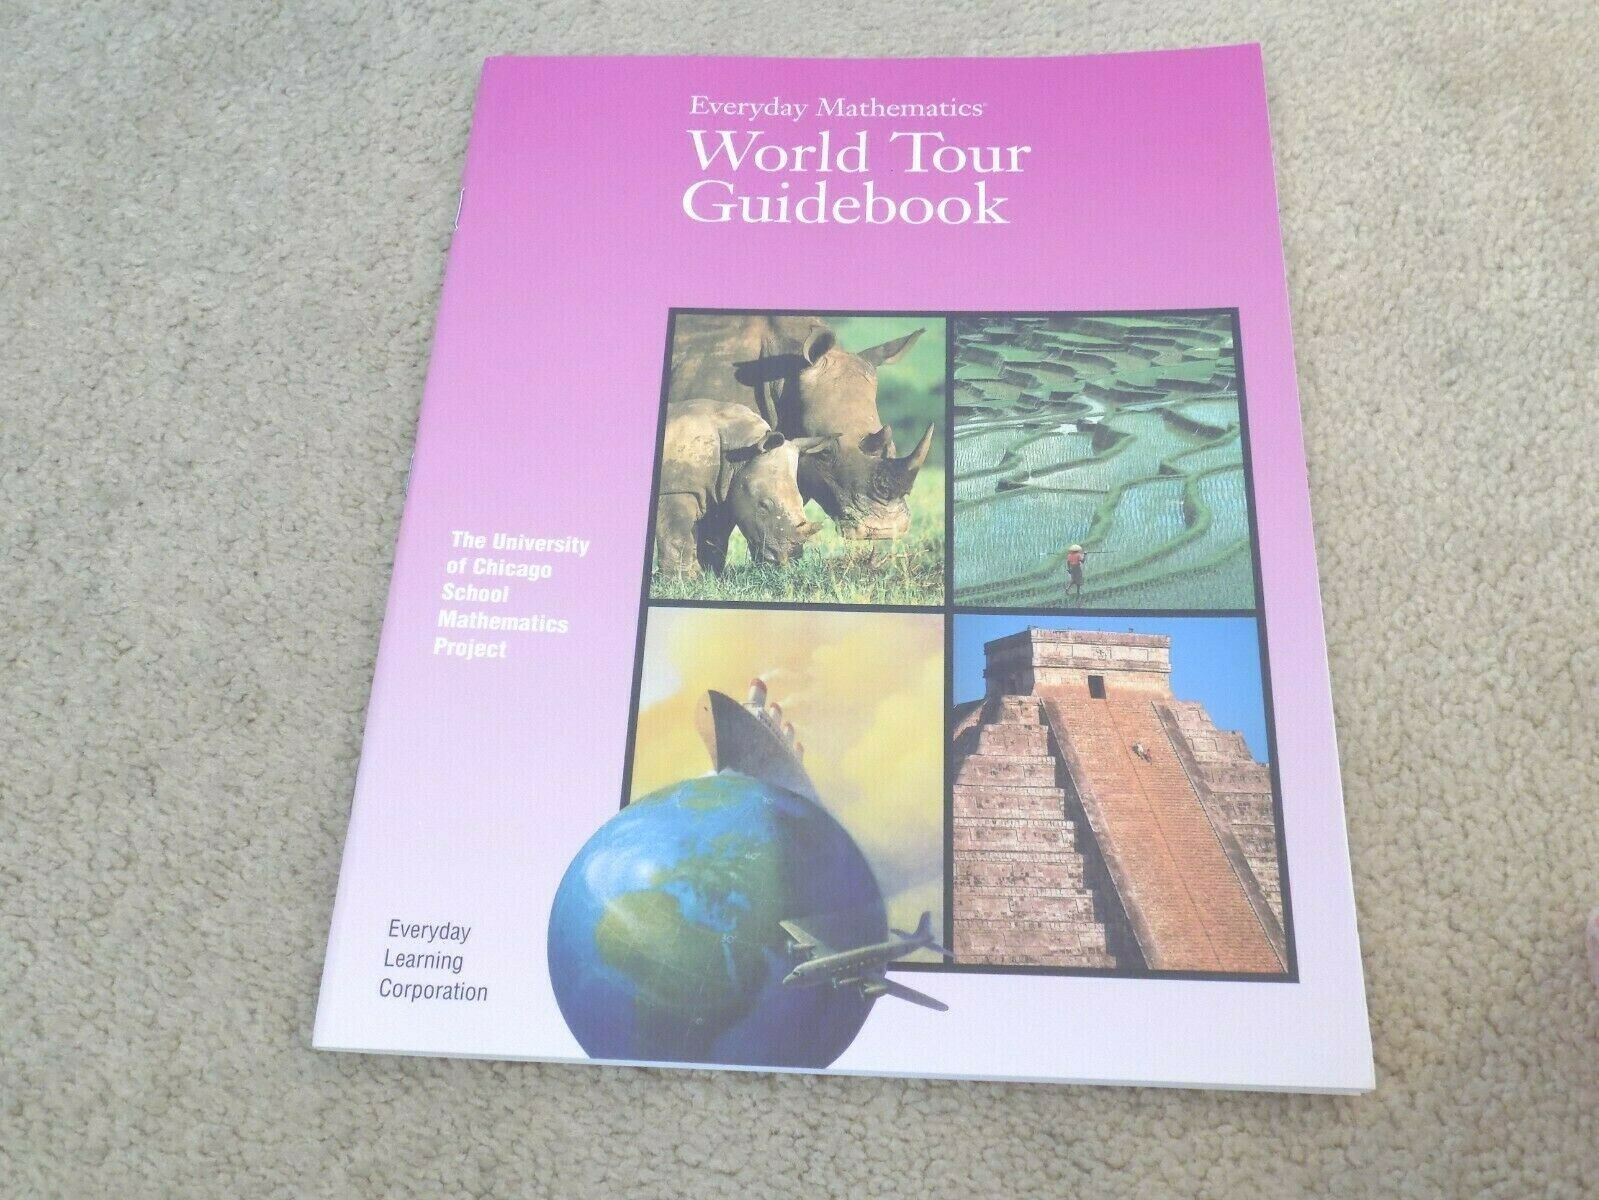 Everyday Mathematics World Tour Guidebook U.of Chicago School Mathematic Project